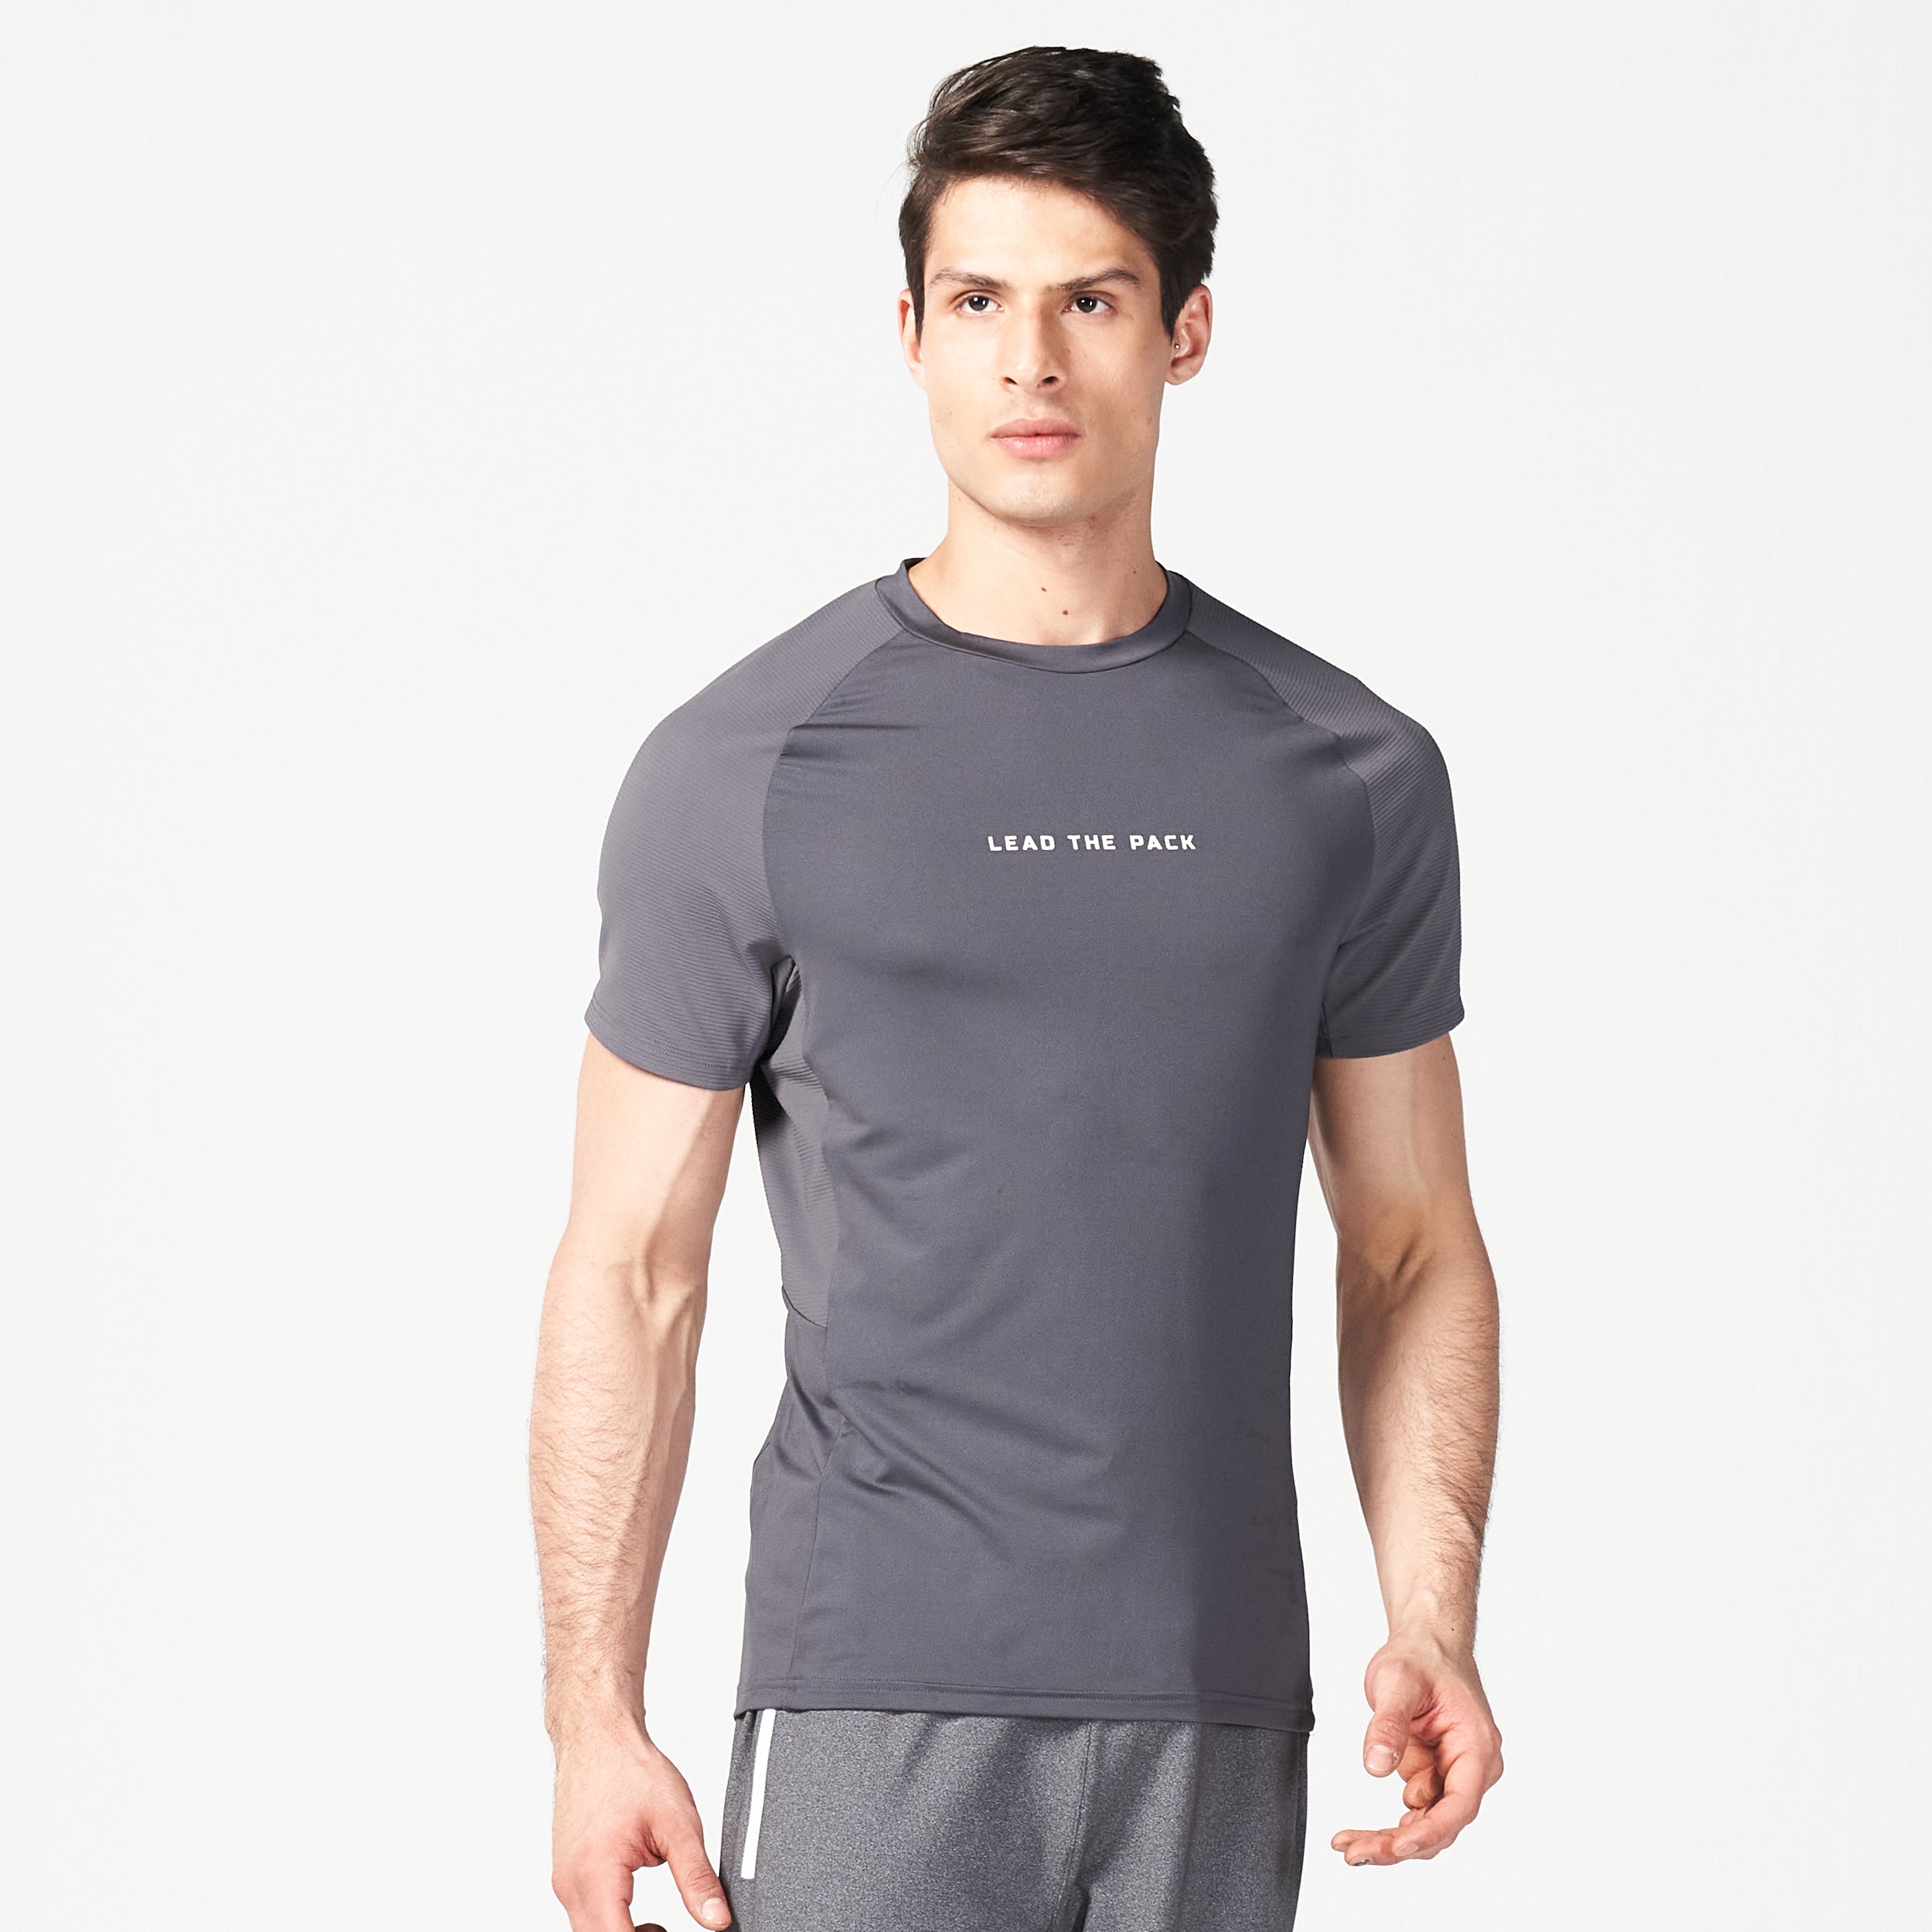 AE | Statement Ribbed Tech Tee - Asphalt | Gym T-Shirts Men | SQUATWOLF